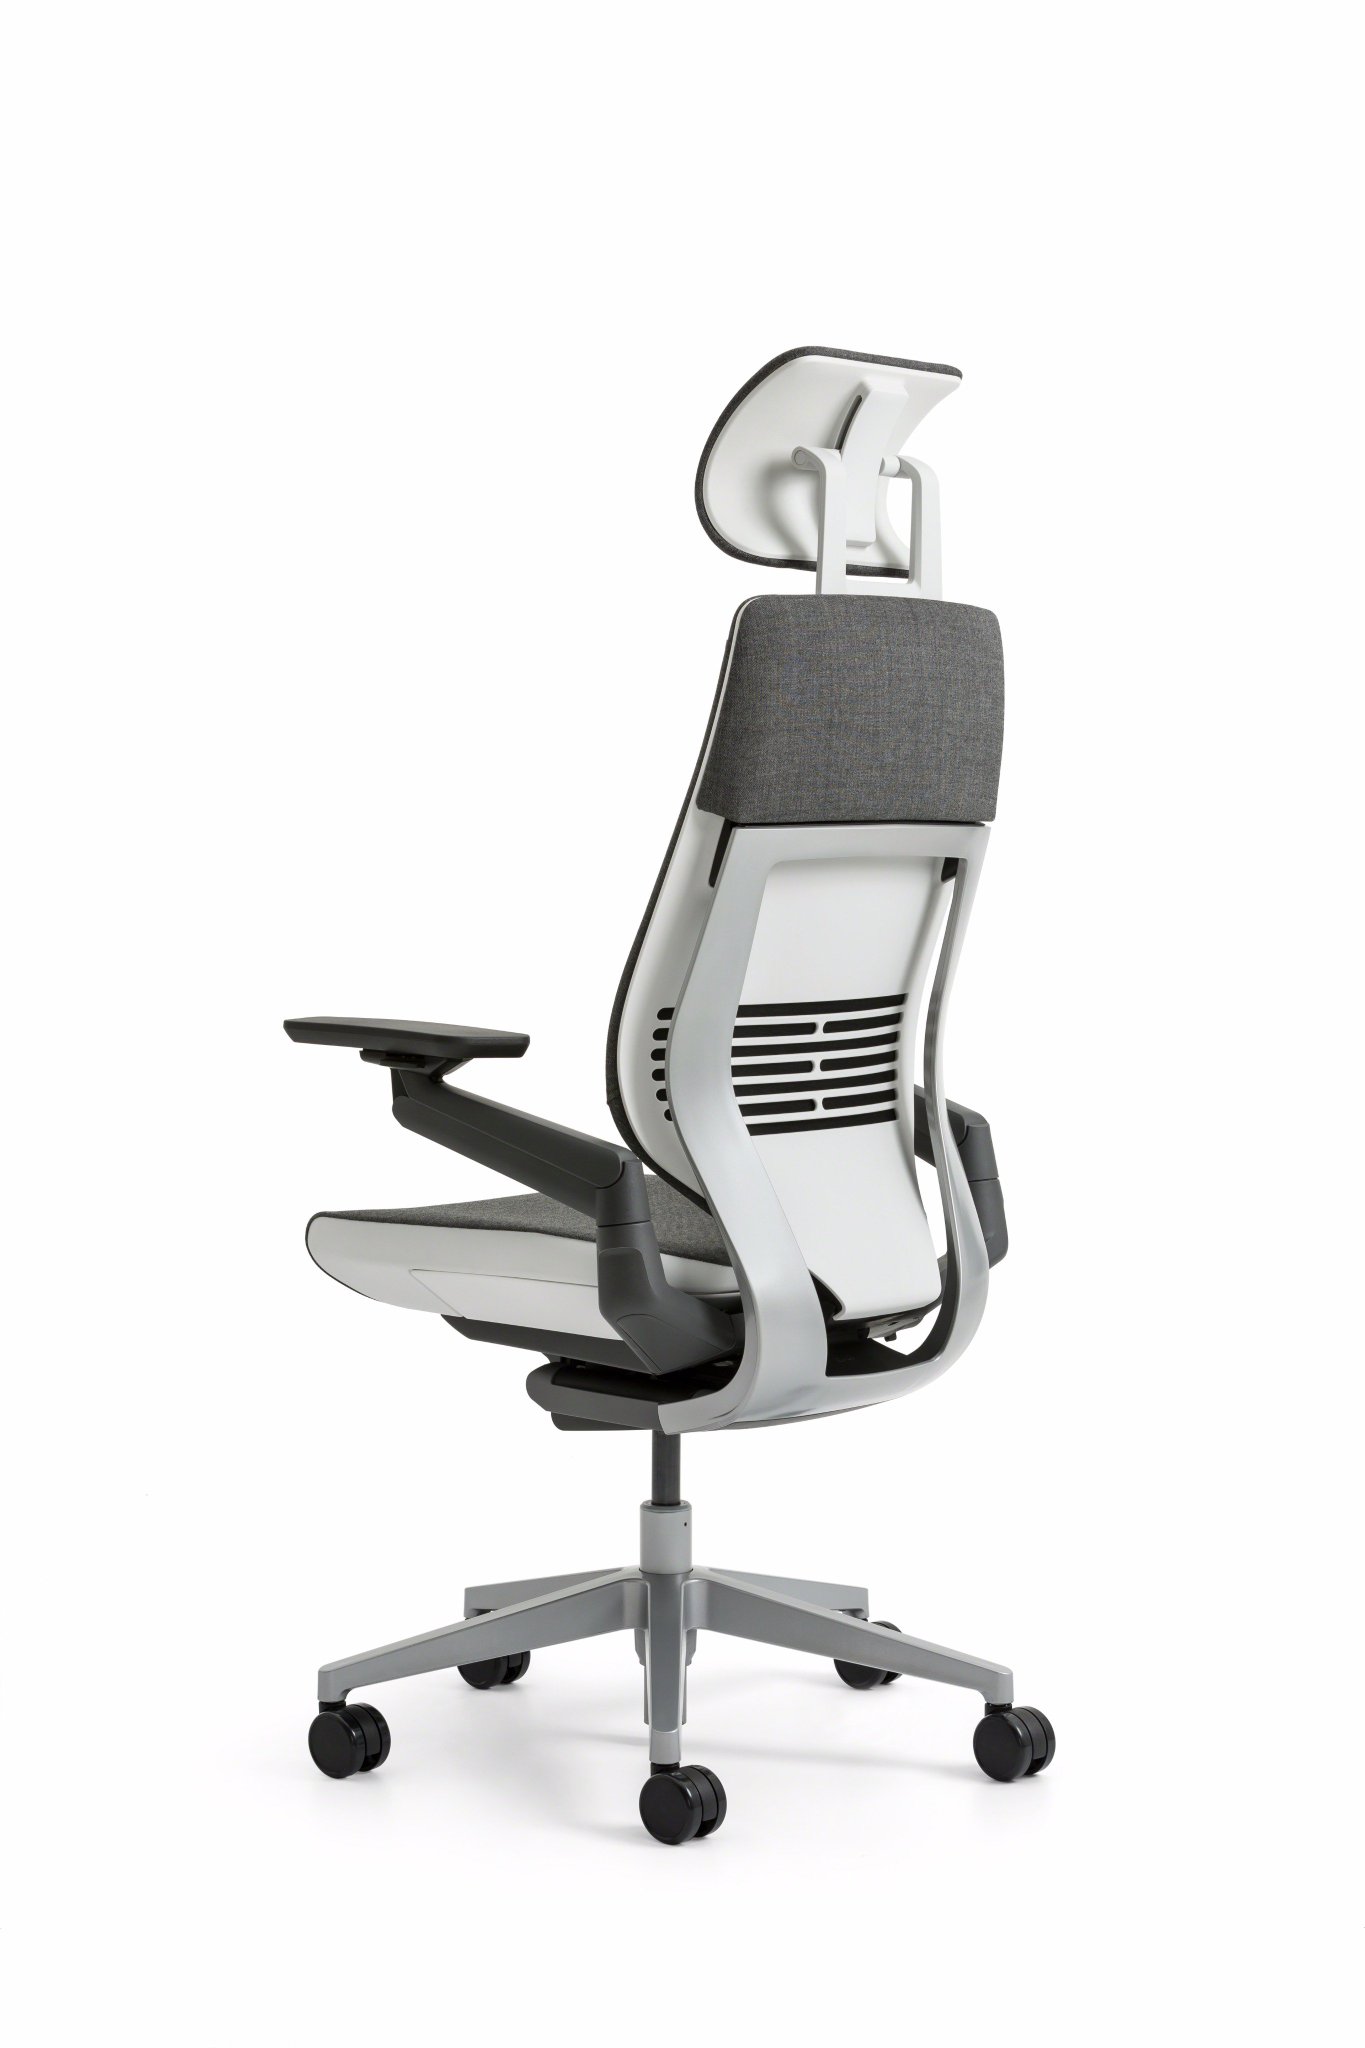 Steelcase Uk On Twitter Our Task Chair Gesture With Headrest Wins Germandesignaward 2018 Https T Co Lddf7cboxm Office Taskchair Design